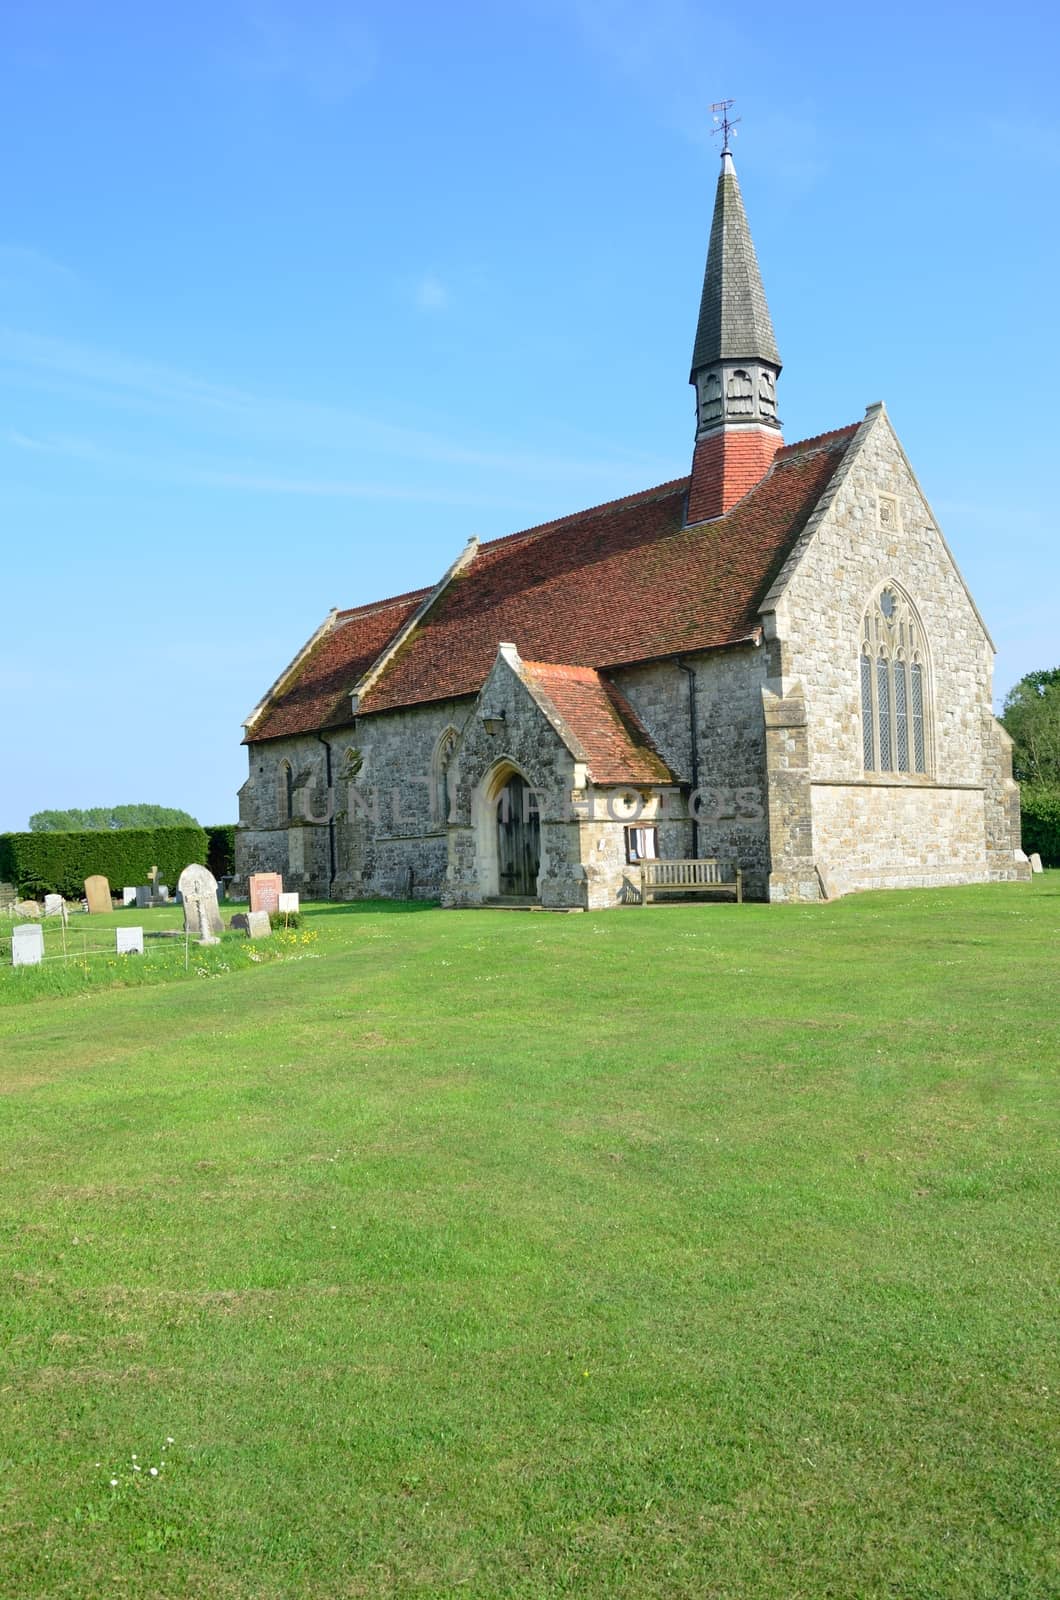 English church on green lawn